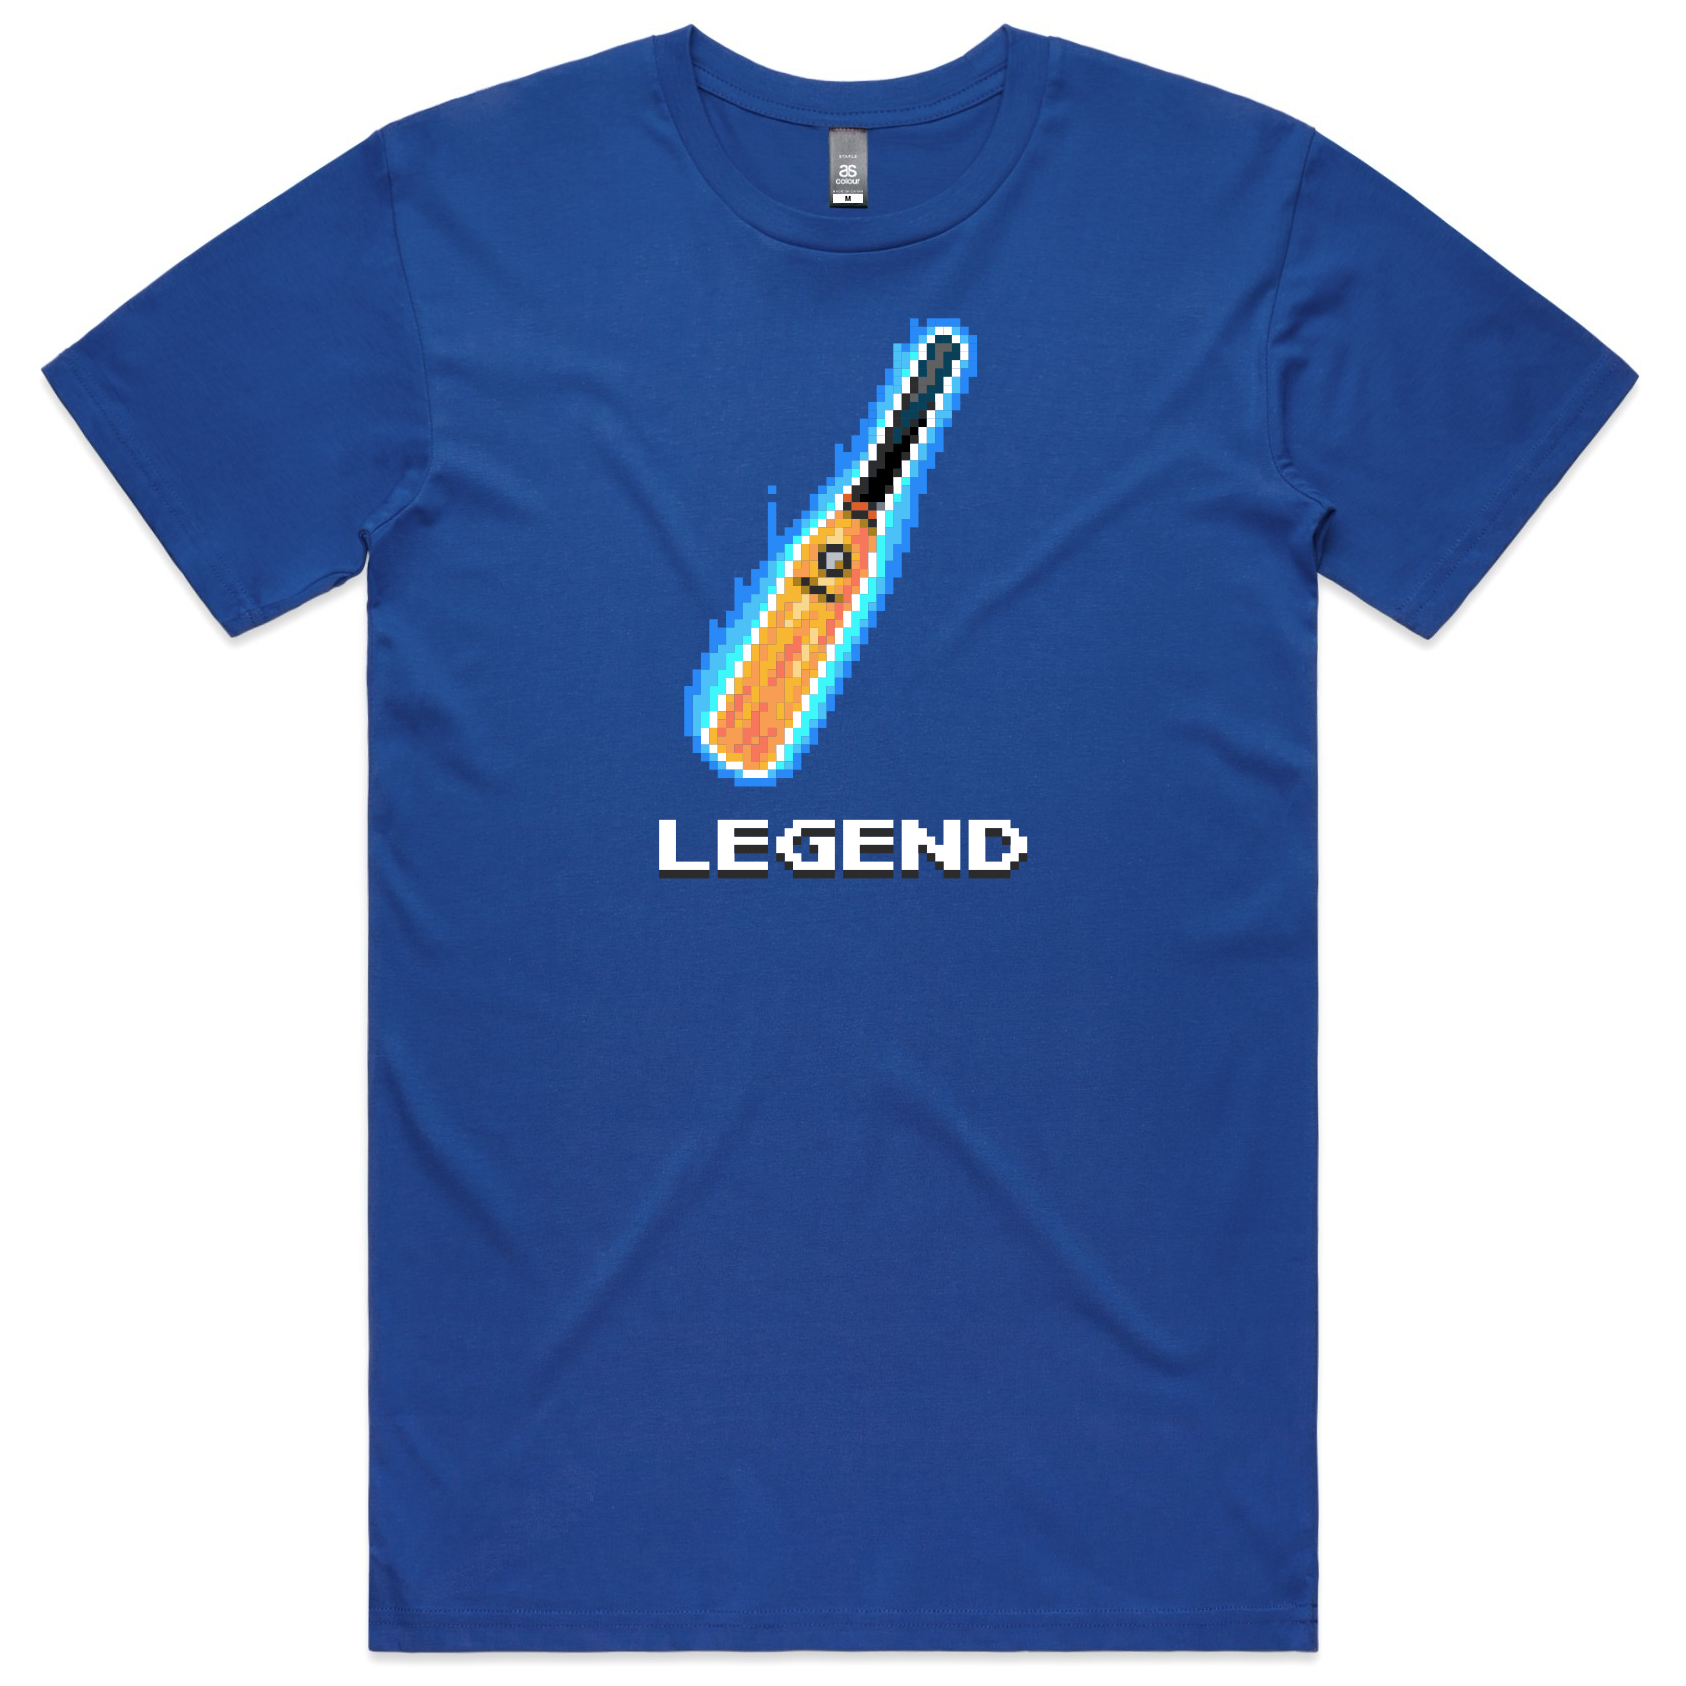 Legend cricket blue t-shirt mens